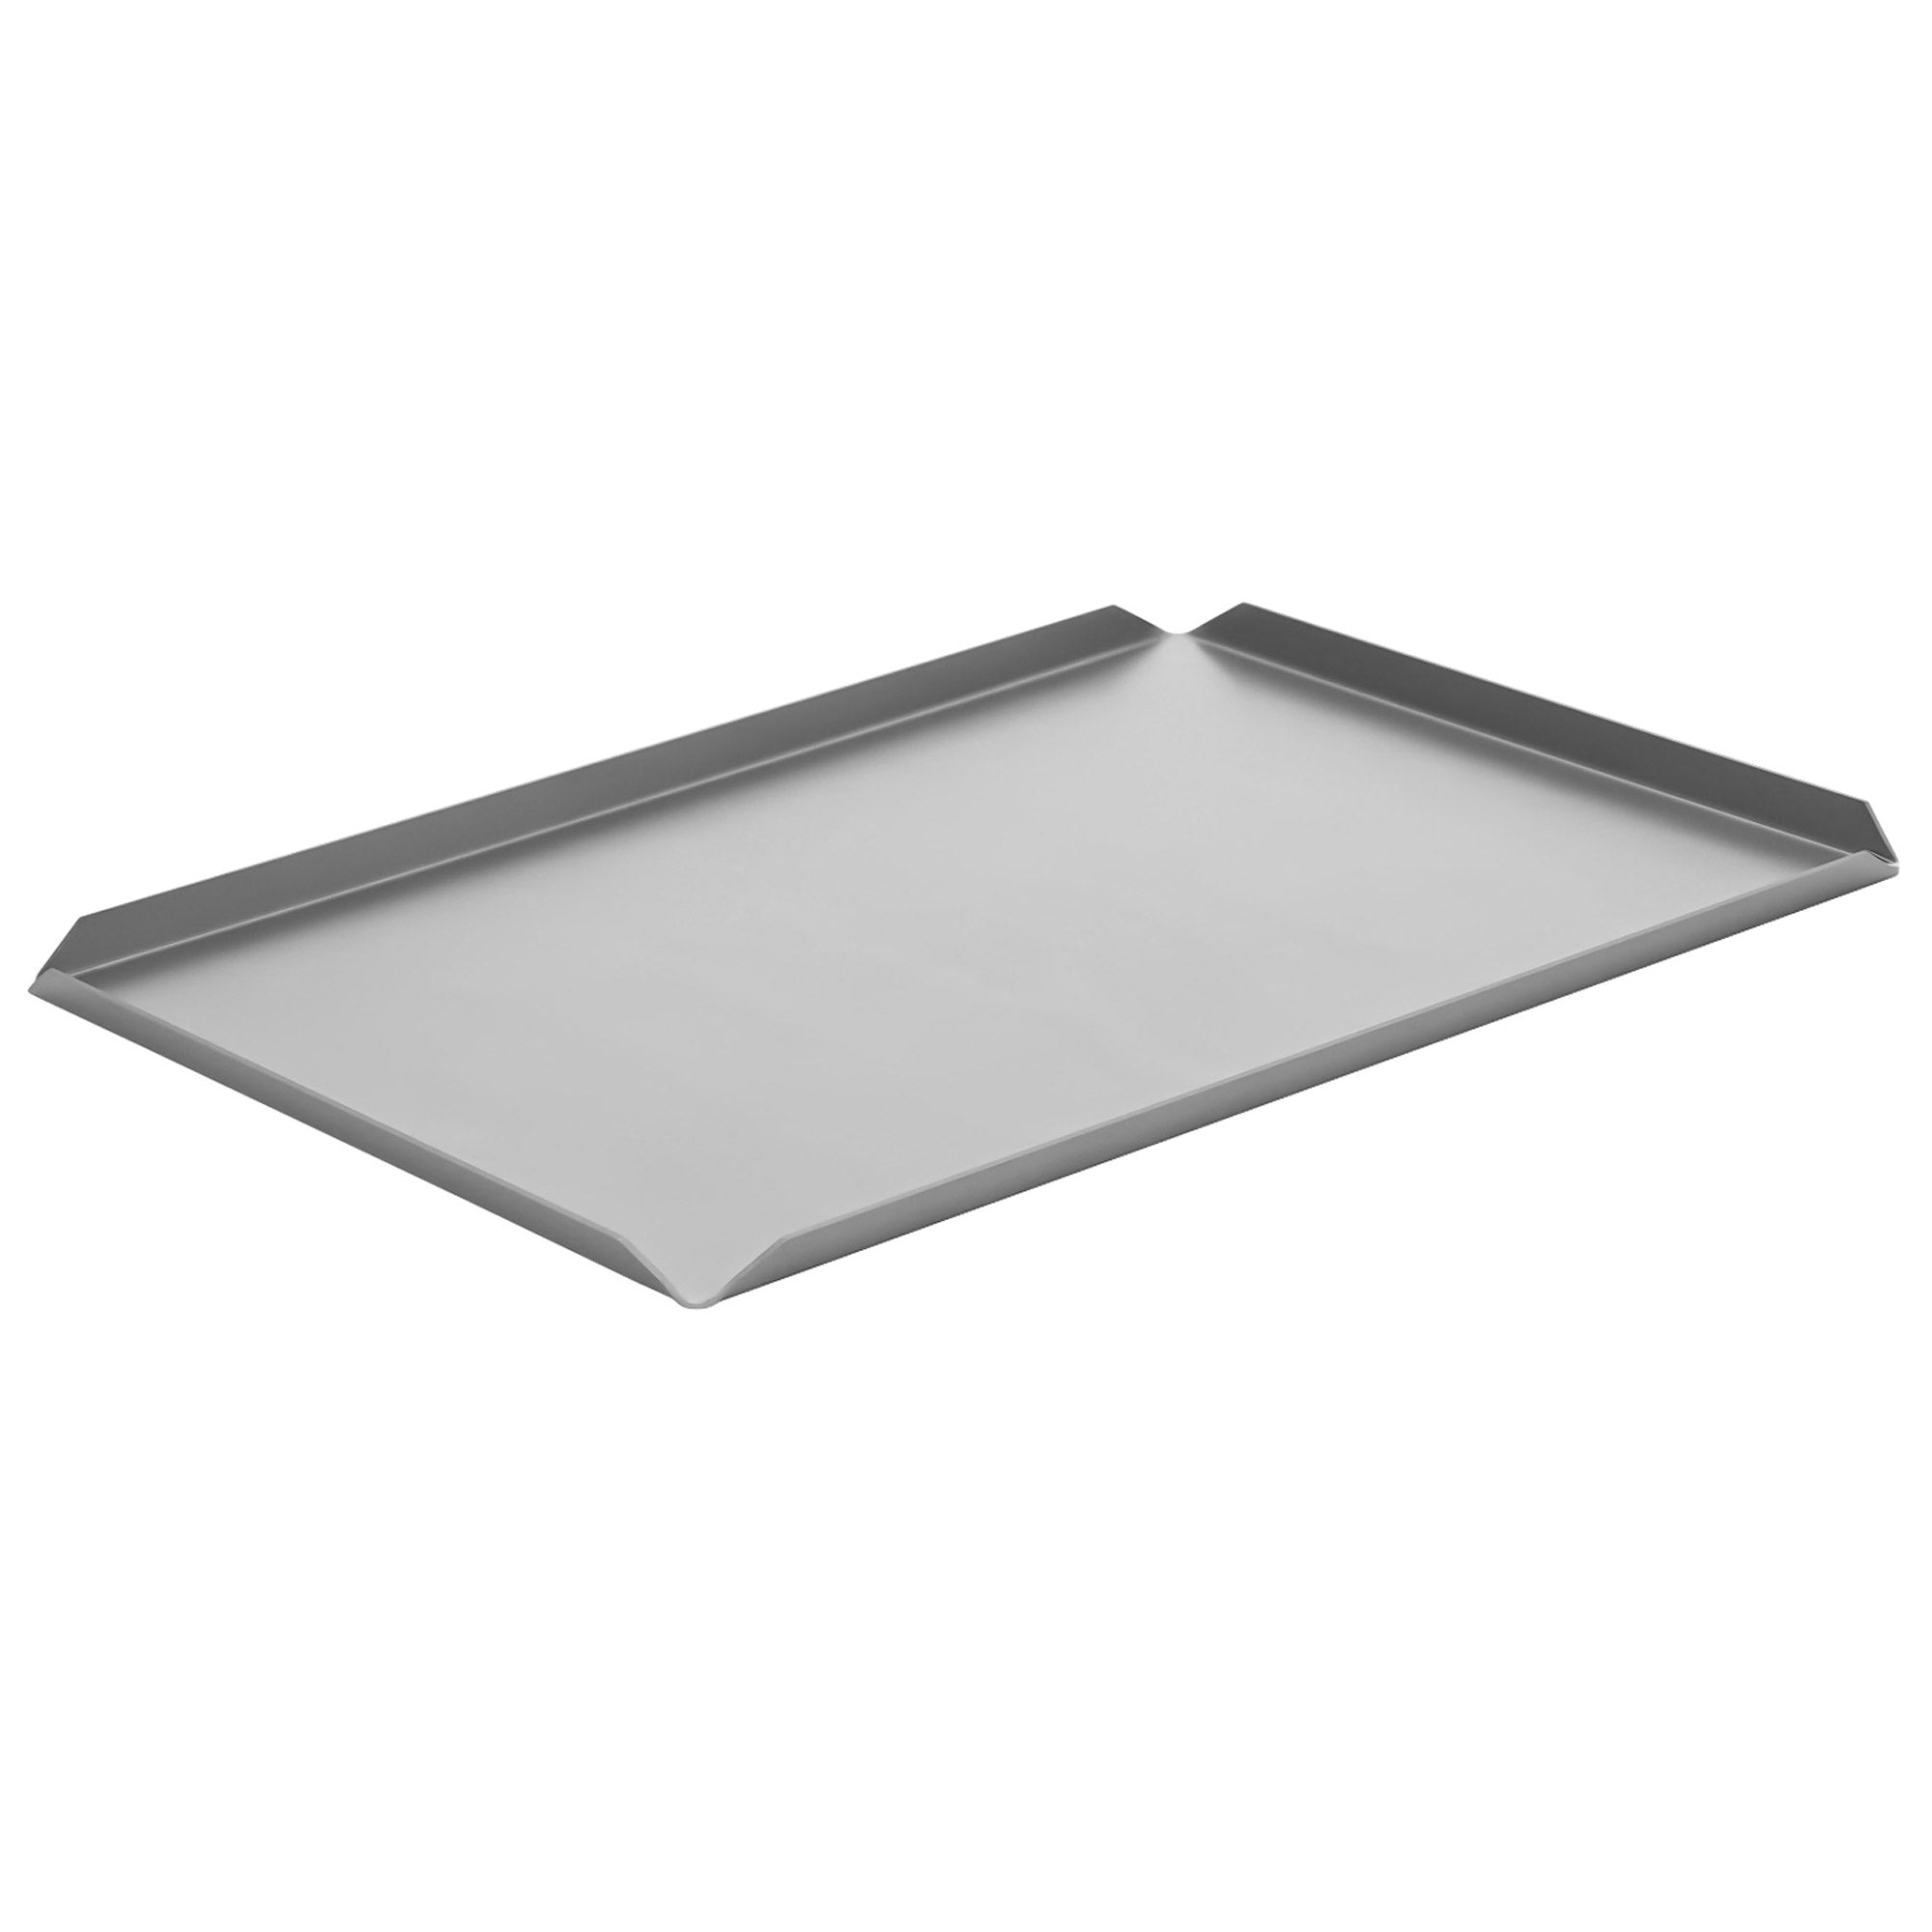 (5 stk.) Konfekt og presentasjonsplate i aluminium - 500 x 150 x 10 mm - aluminium